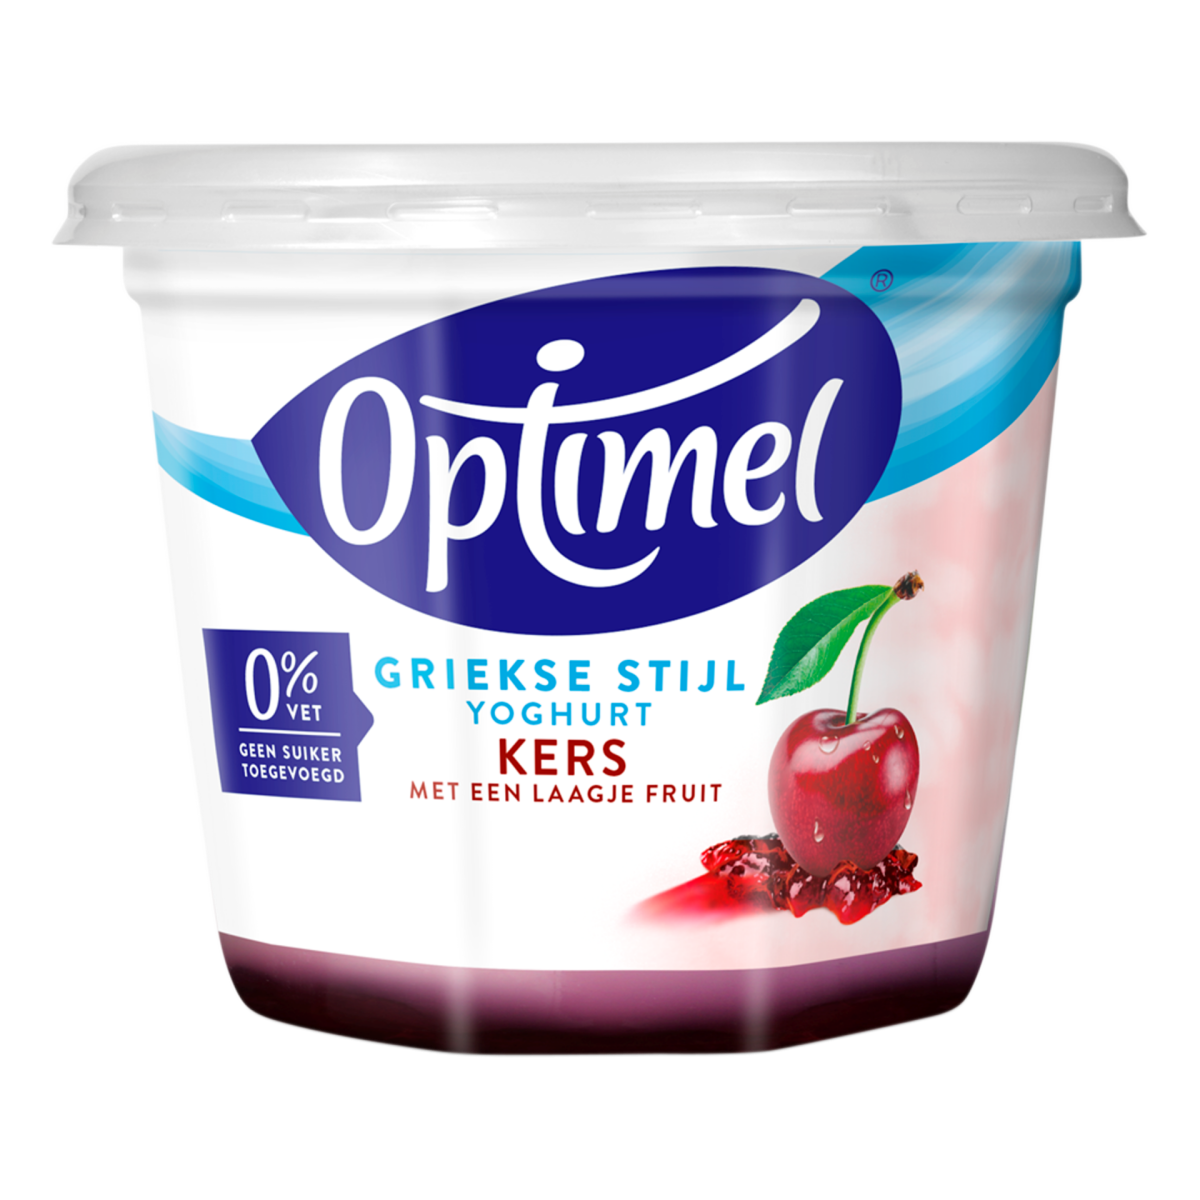 Optimel Yoghurt Griekse stijl kers 0% vet 450g